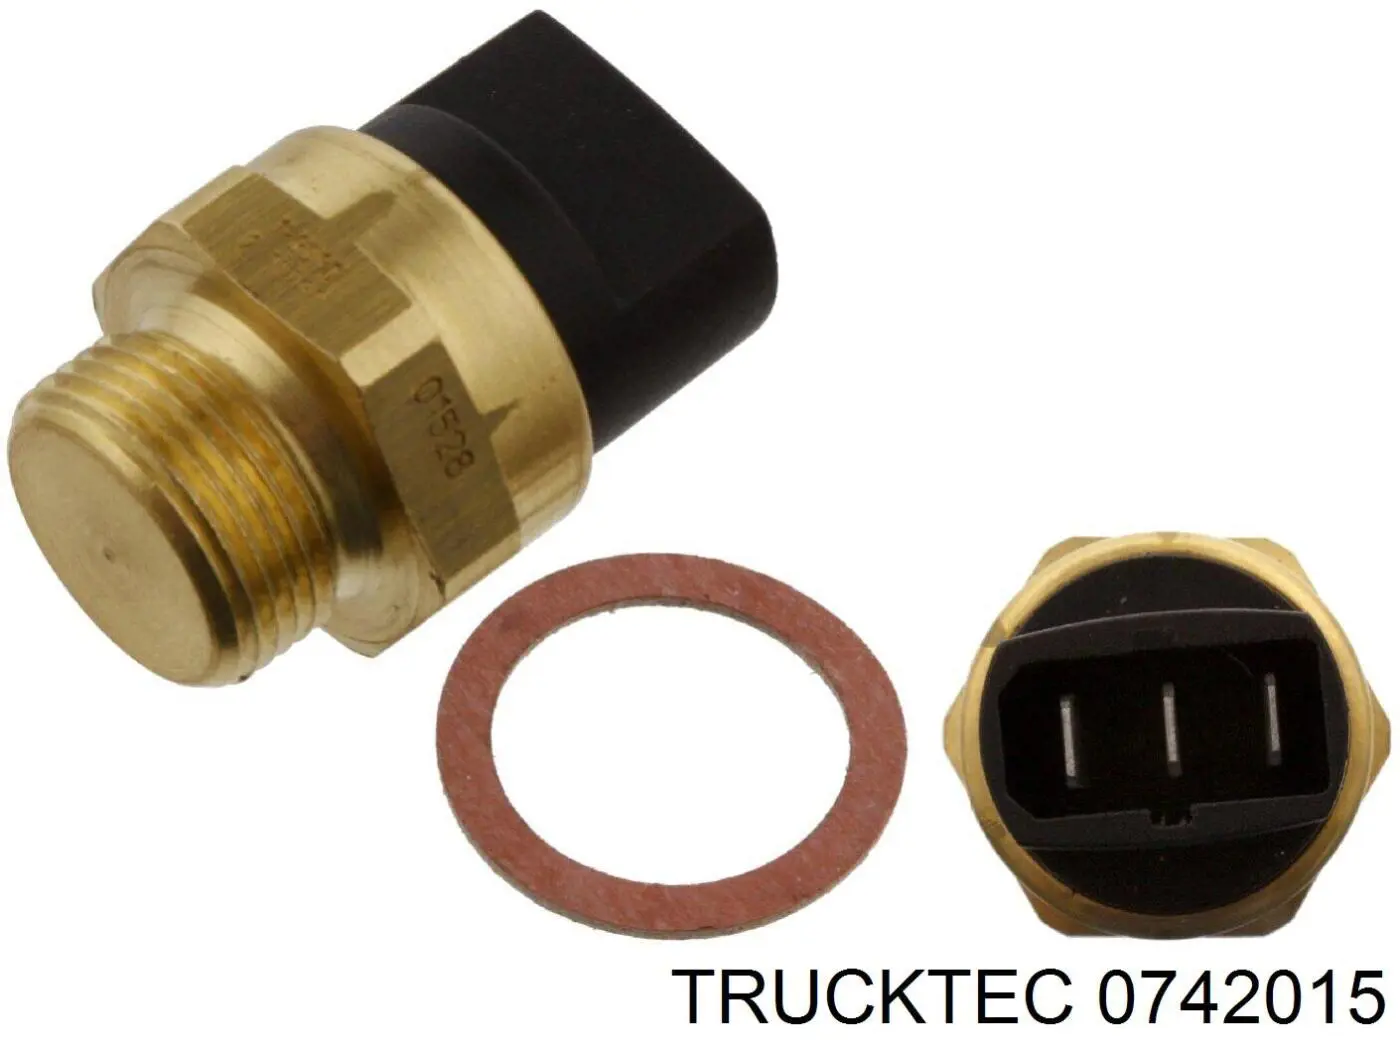 07.42.015 Trucktec sensor, temperatura del refrigerante (encendido el ventilador del radiador)